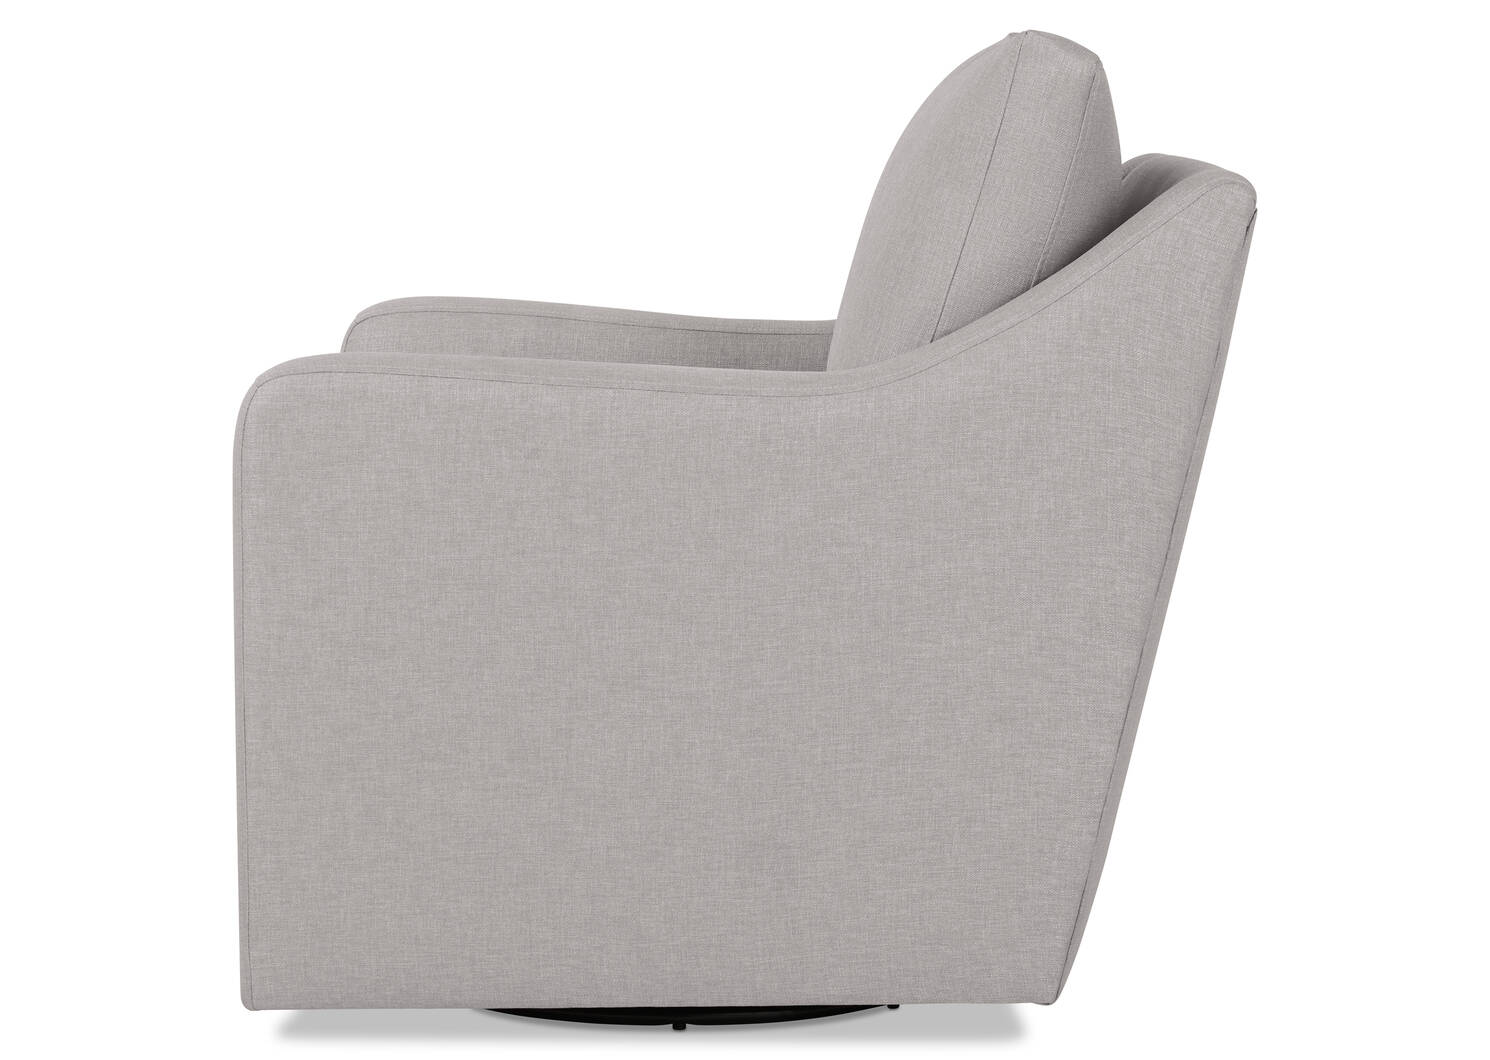 Rorke Custom Swivel Chair